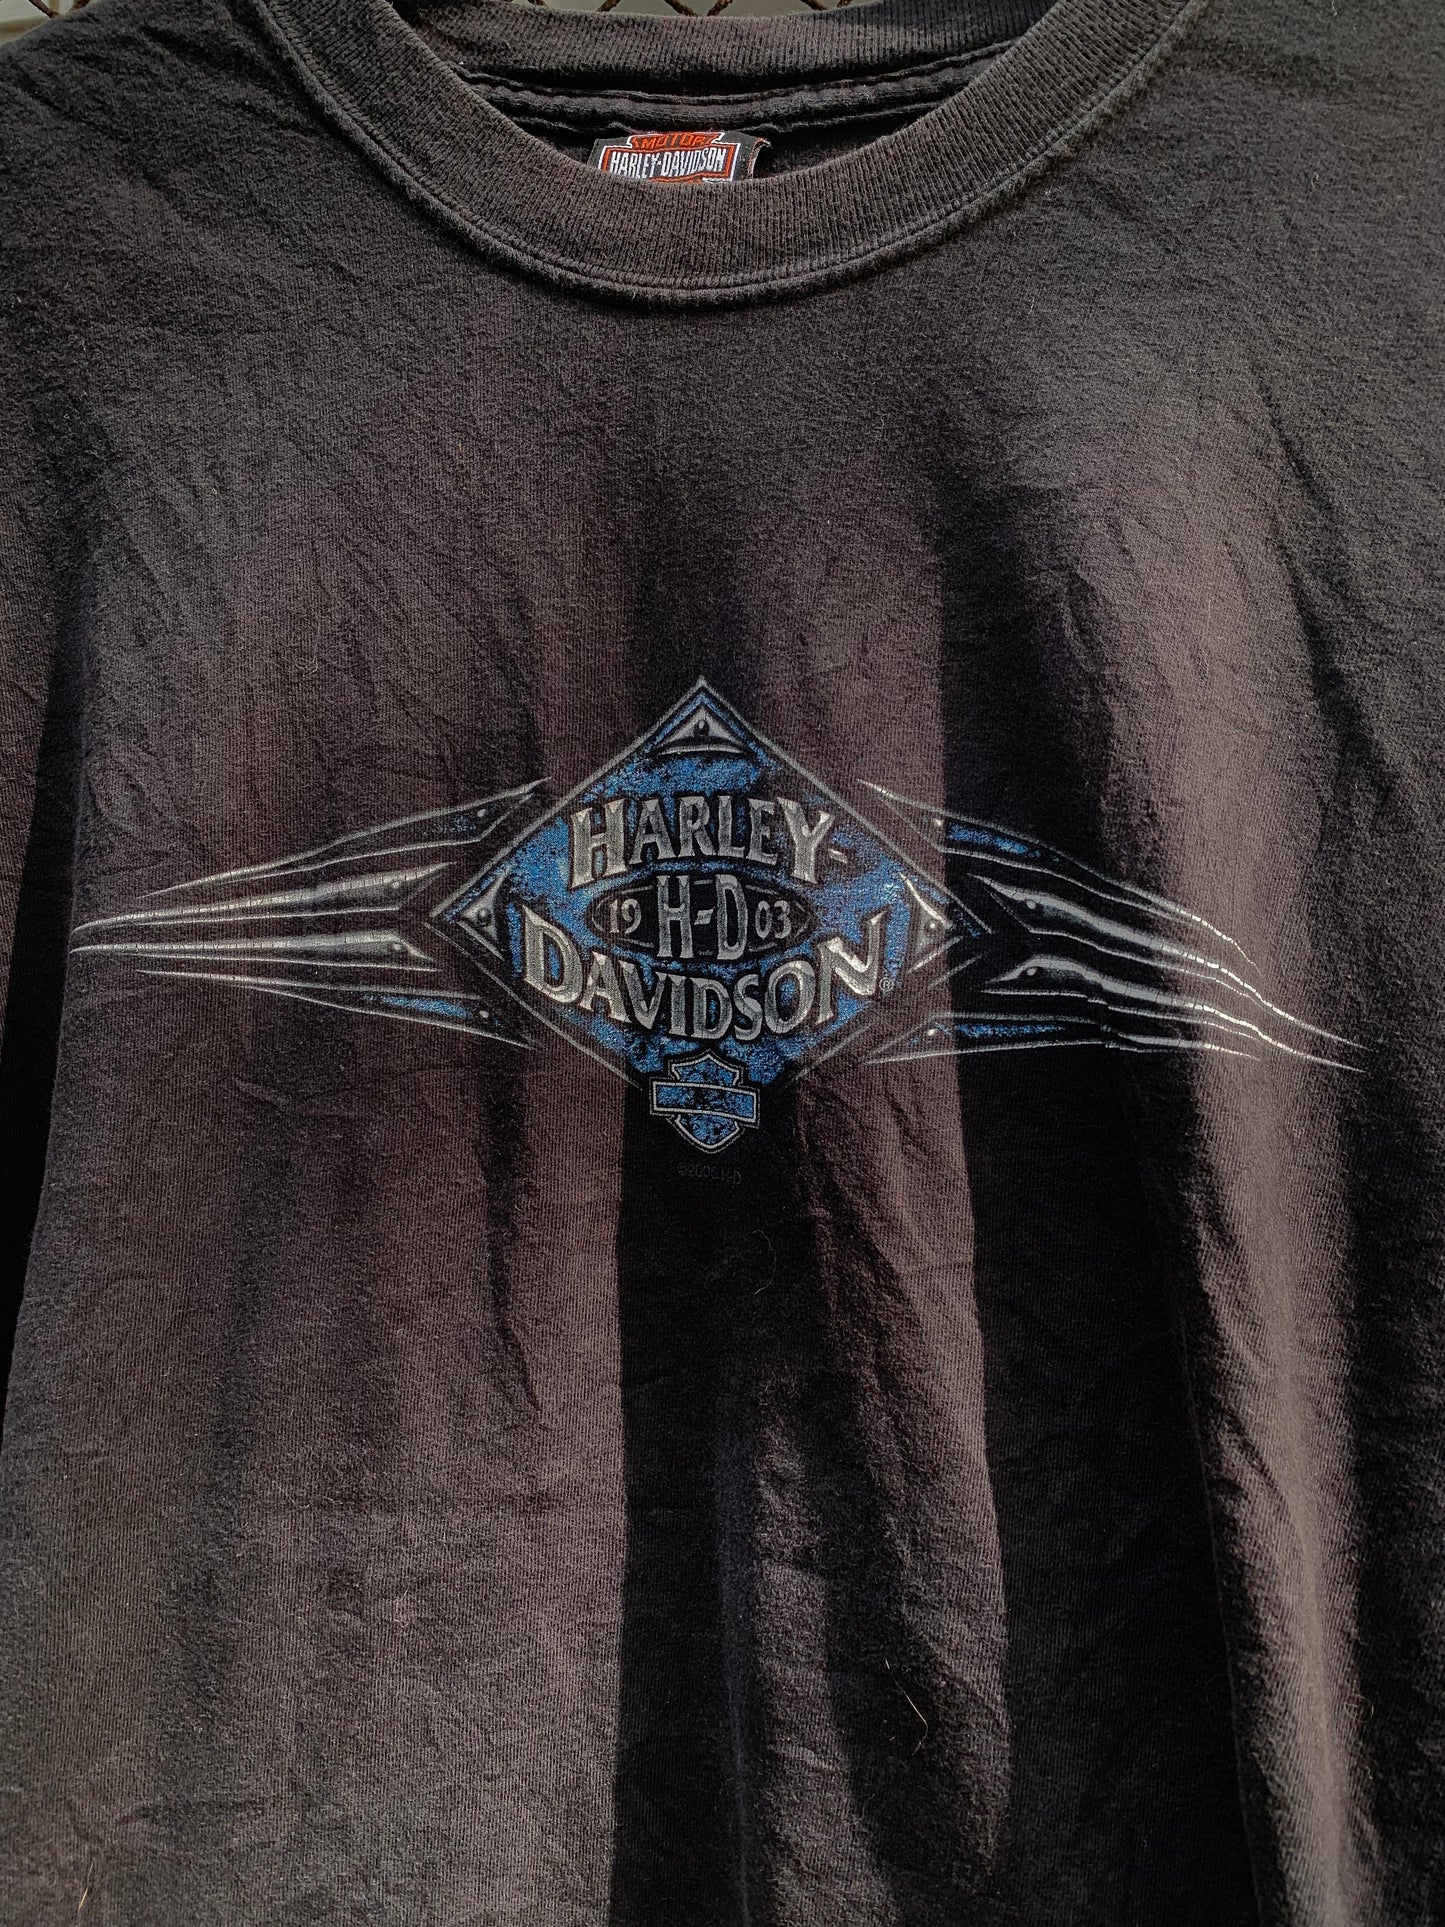 Faribault Harley Davidson Tee-Shirt